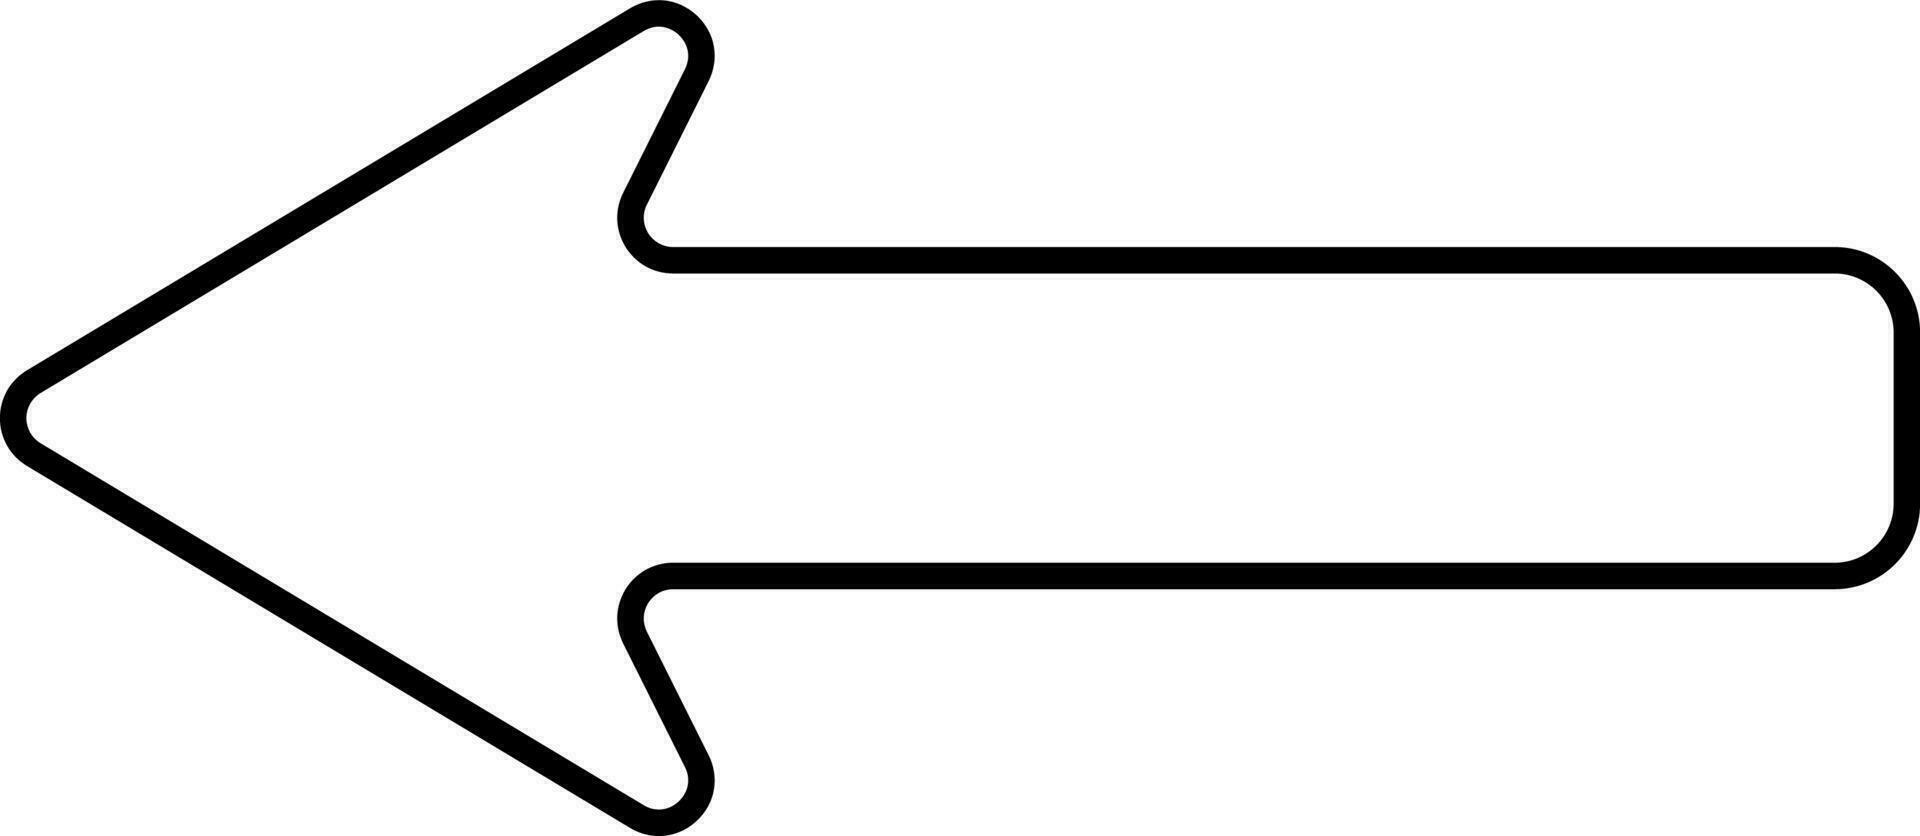 Black Linear Style Back Arrow Icon Or Symbol. vector